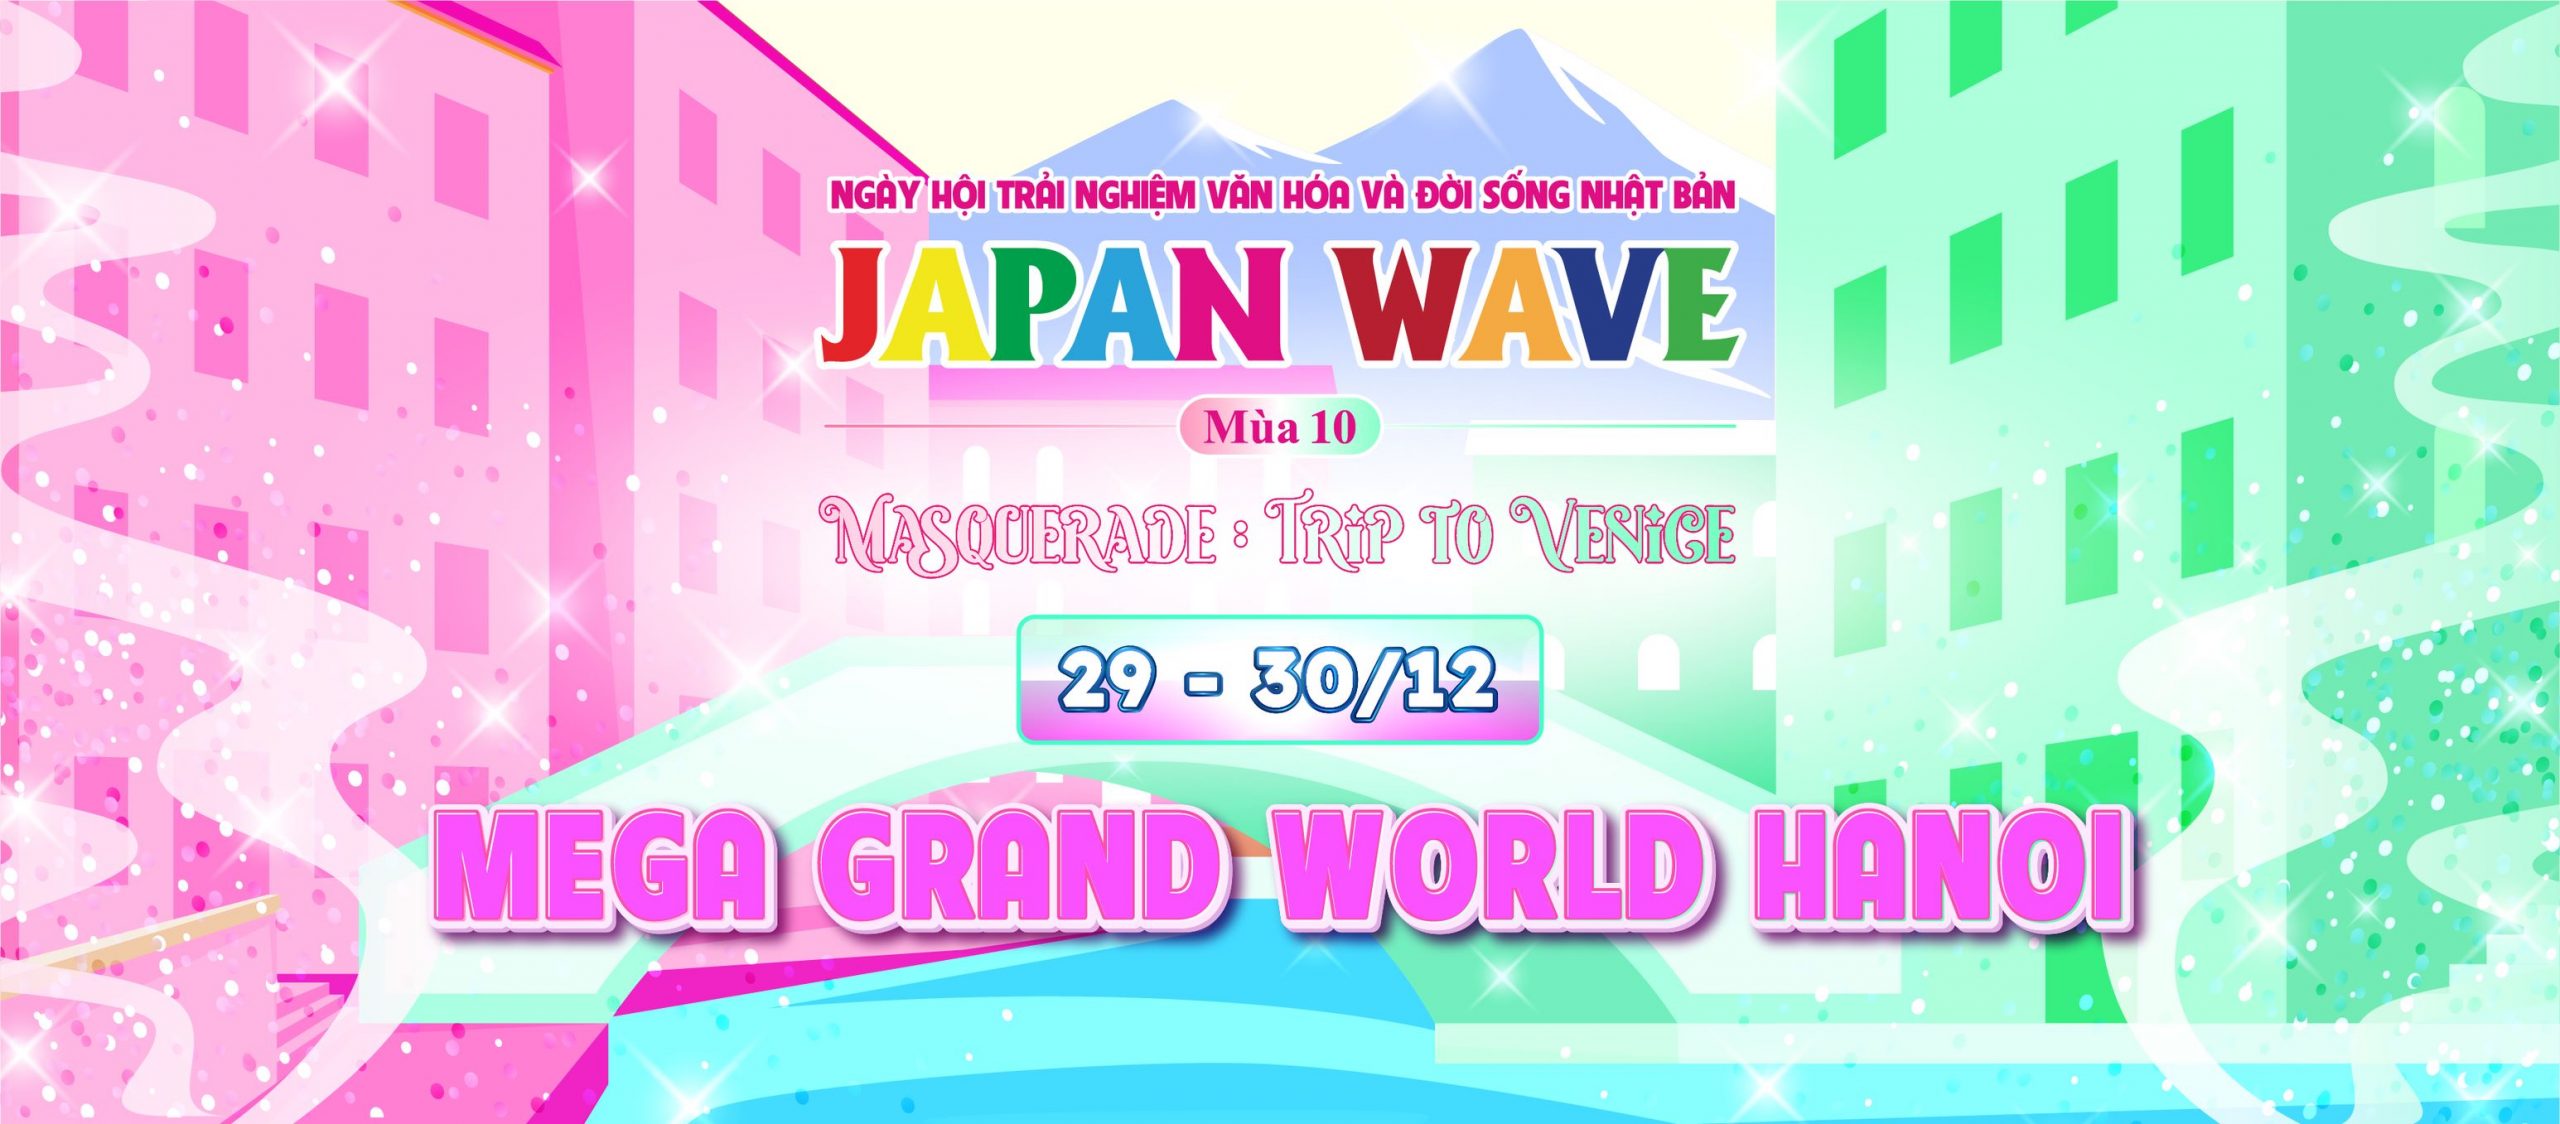 Lễ hội Nhật Bản Japan Wave 10 tại Mega Grand World 